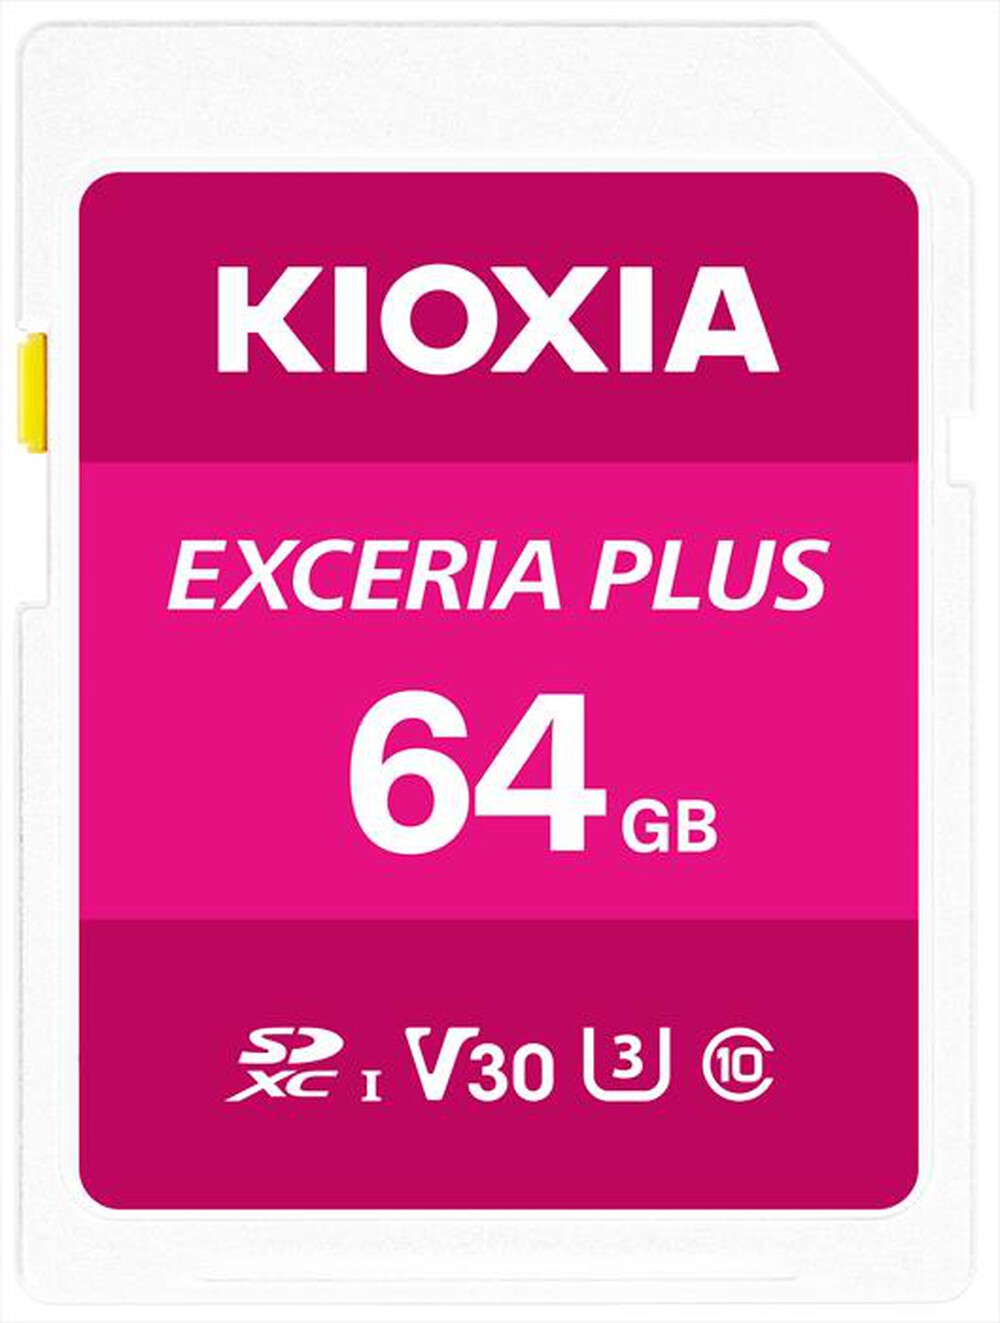 "KIOXIA - SD EXCERIA PLUS NPL1 UHS-1 64GB-Rosa"